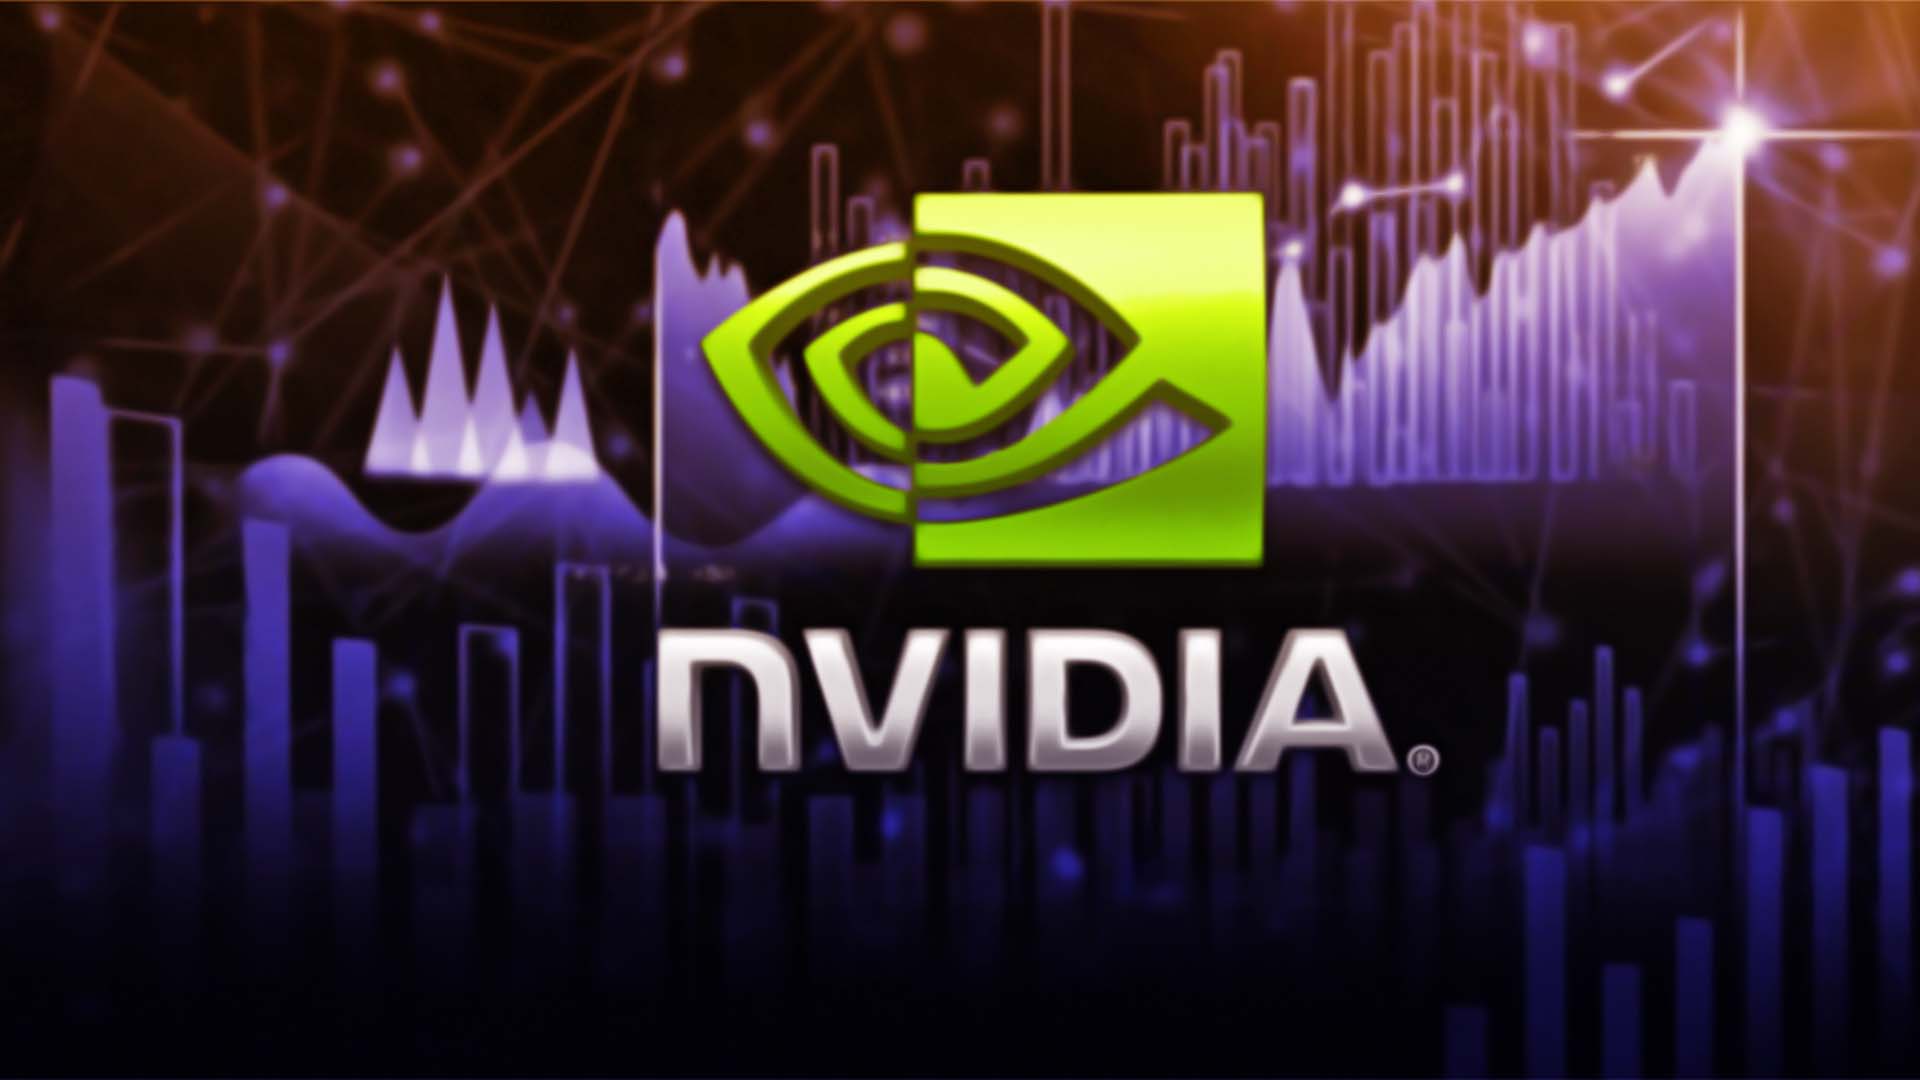 Will Nvidia Stock Price (NASDAQ:NVDA) Avoid this Declining Streak? – Exclusive Technical Analysis